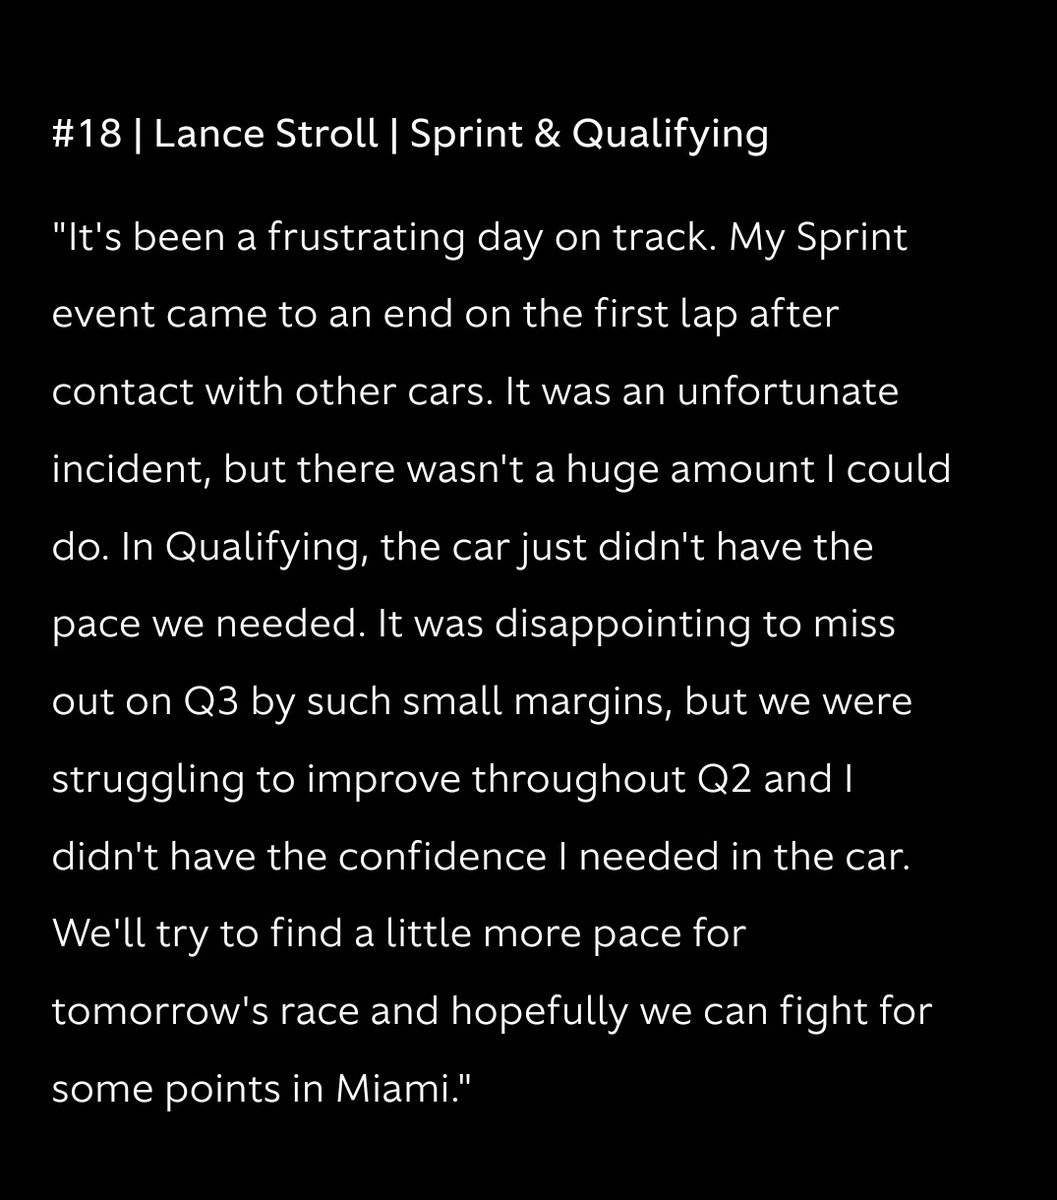 I hope you'll have a good race tomorrow my boy @lance_stroll 💚🥺